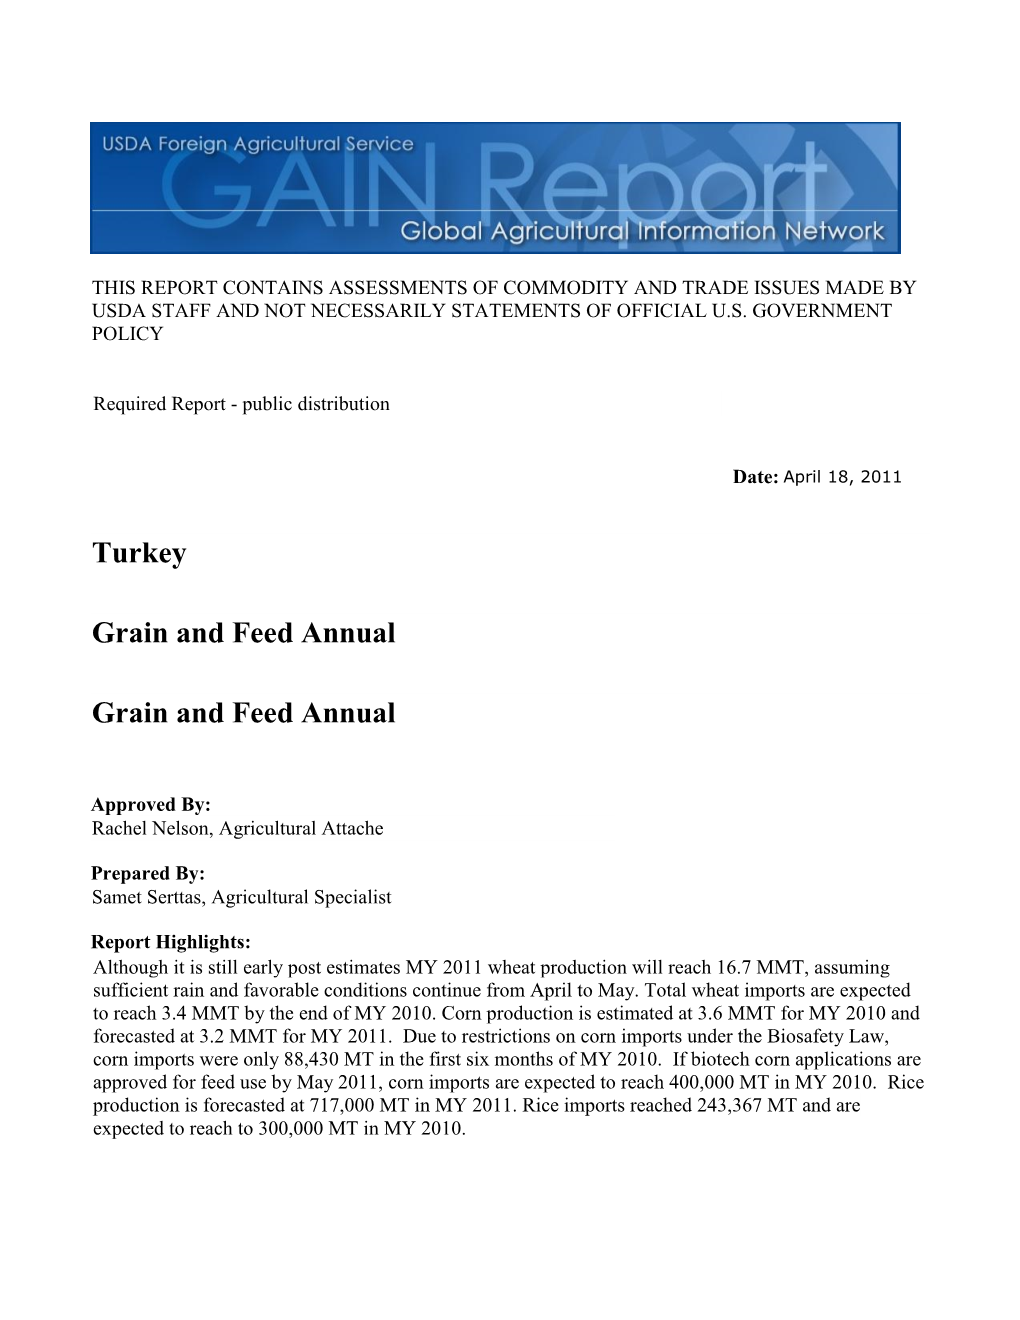 Grain and Feed Annual Grain and Feed Annual Turkey